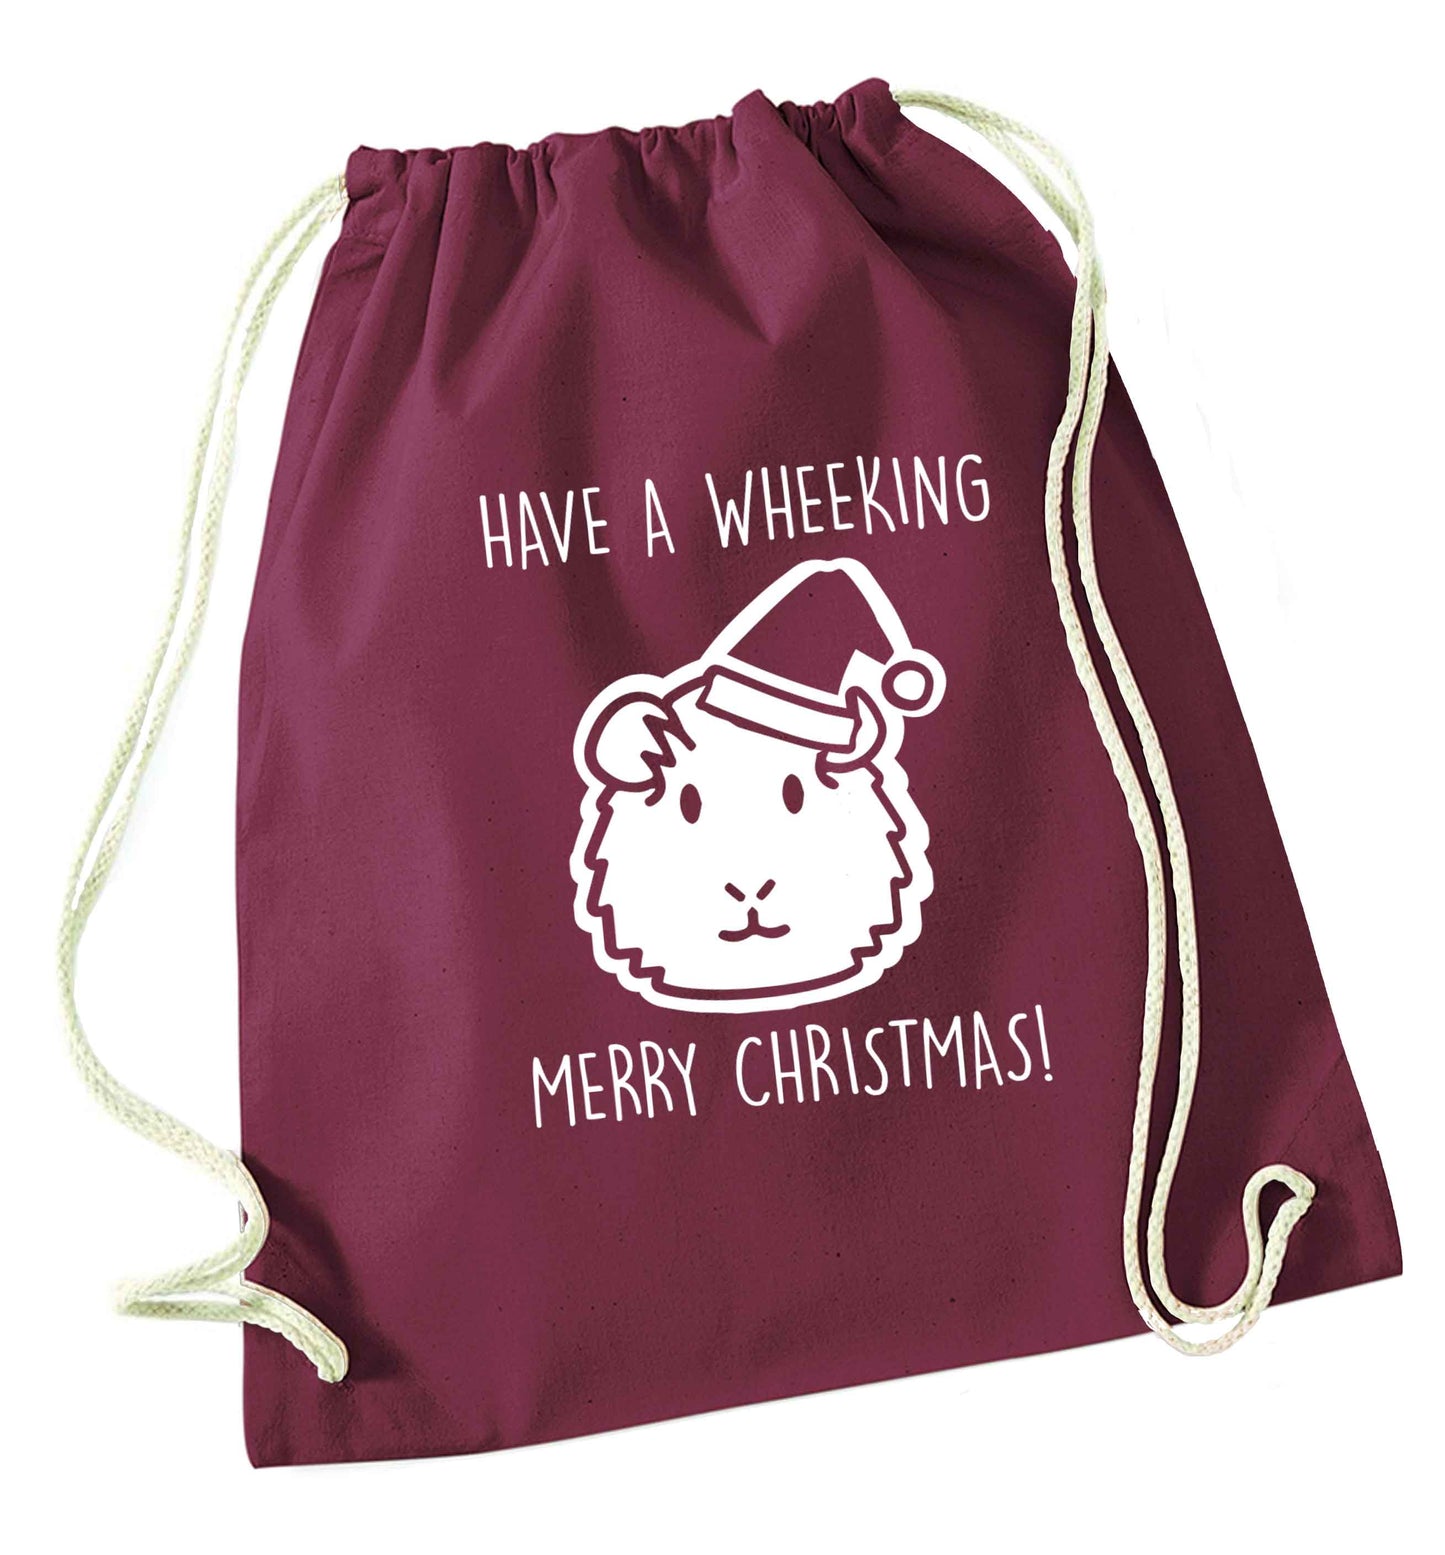 Have a wheeking merry Christmas maroon drawstring bag